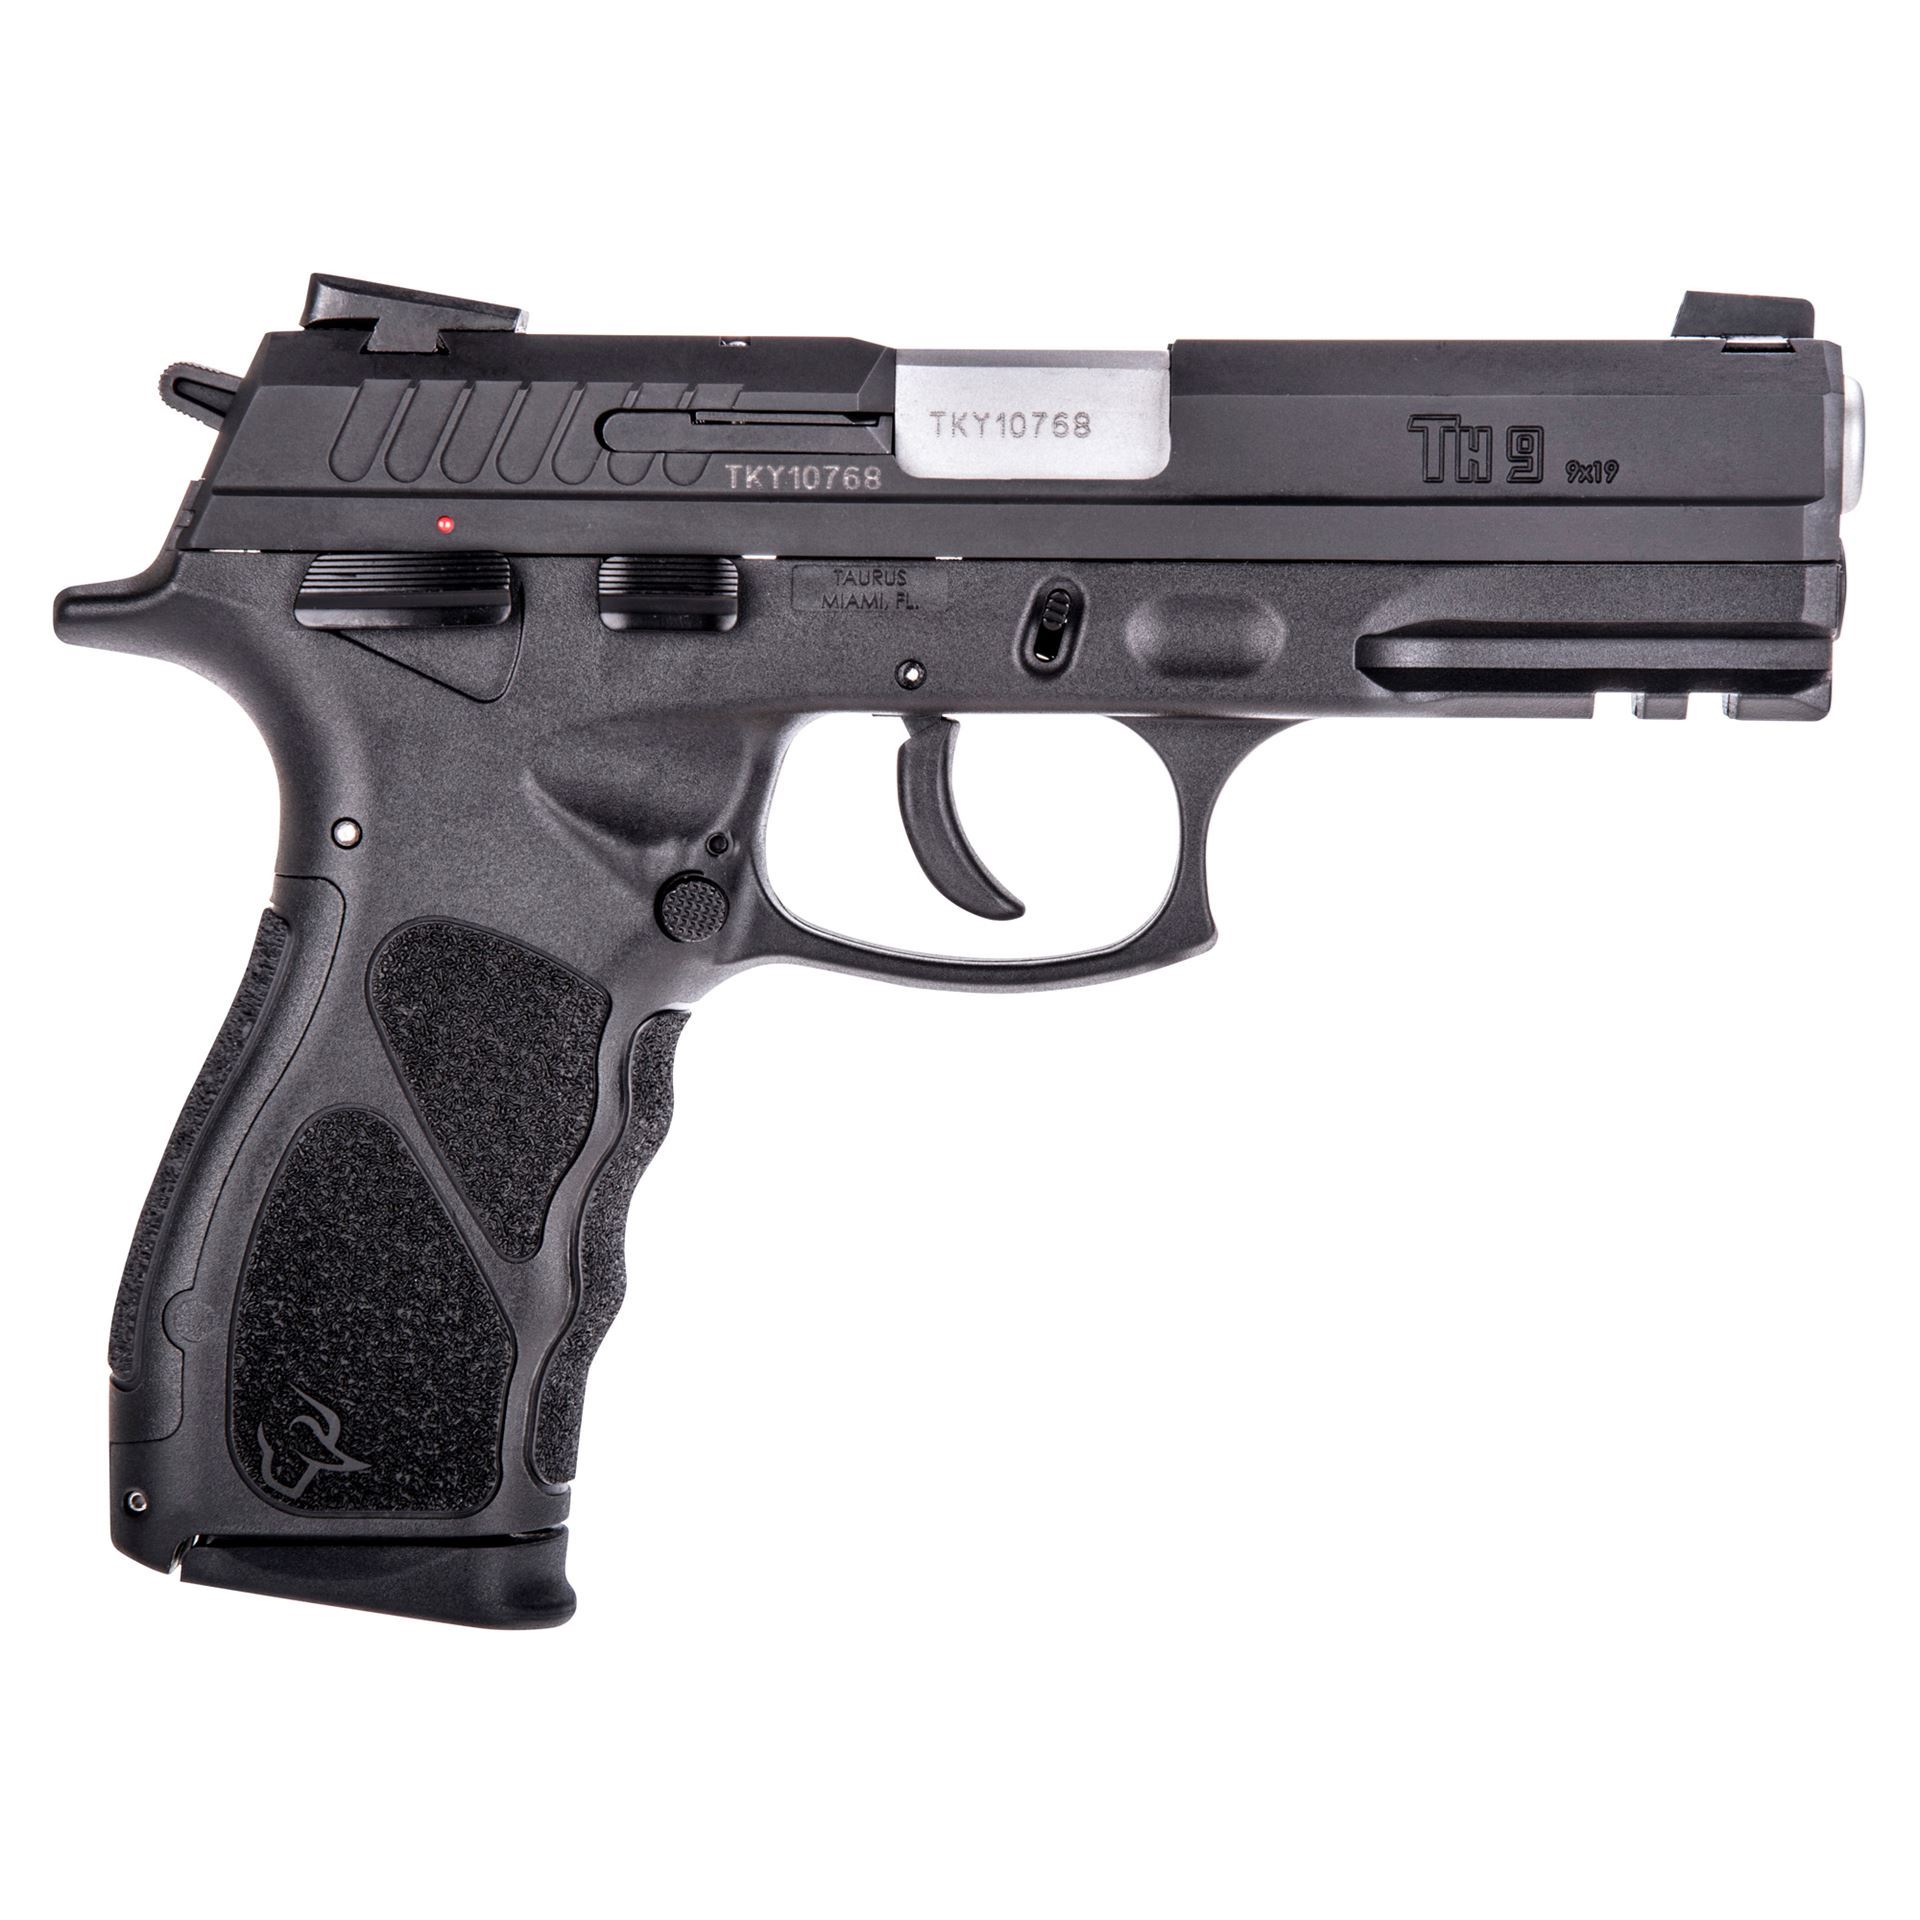 Taurus g3 9mm full size pistol review - lopihoney